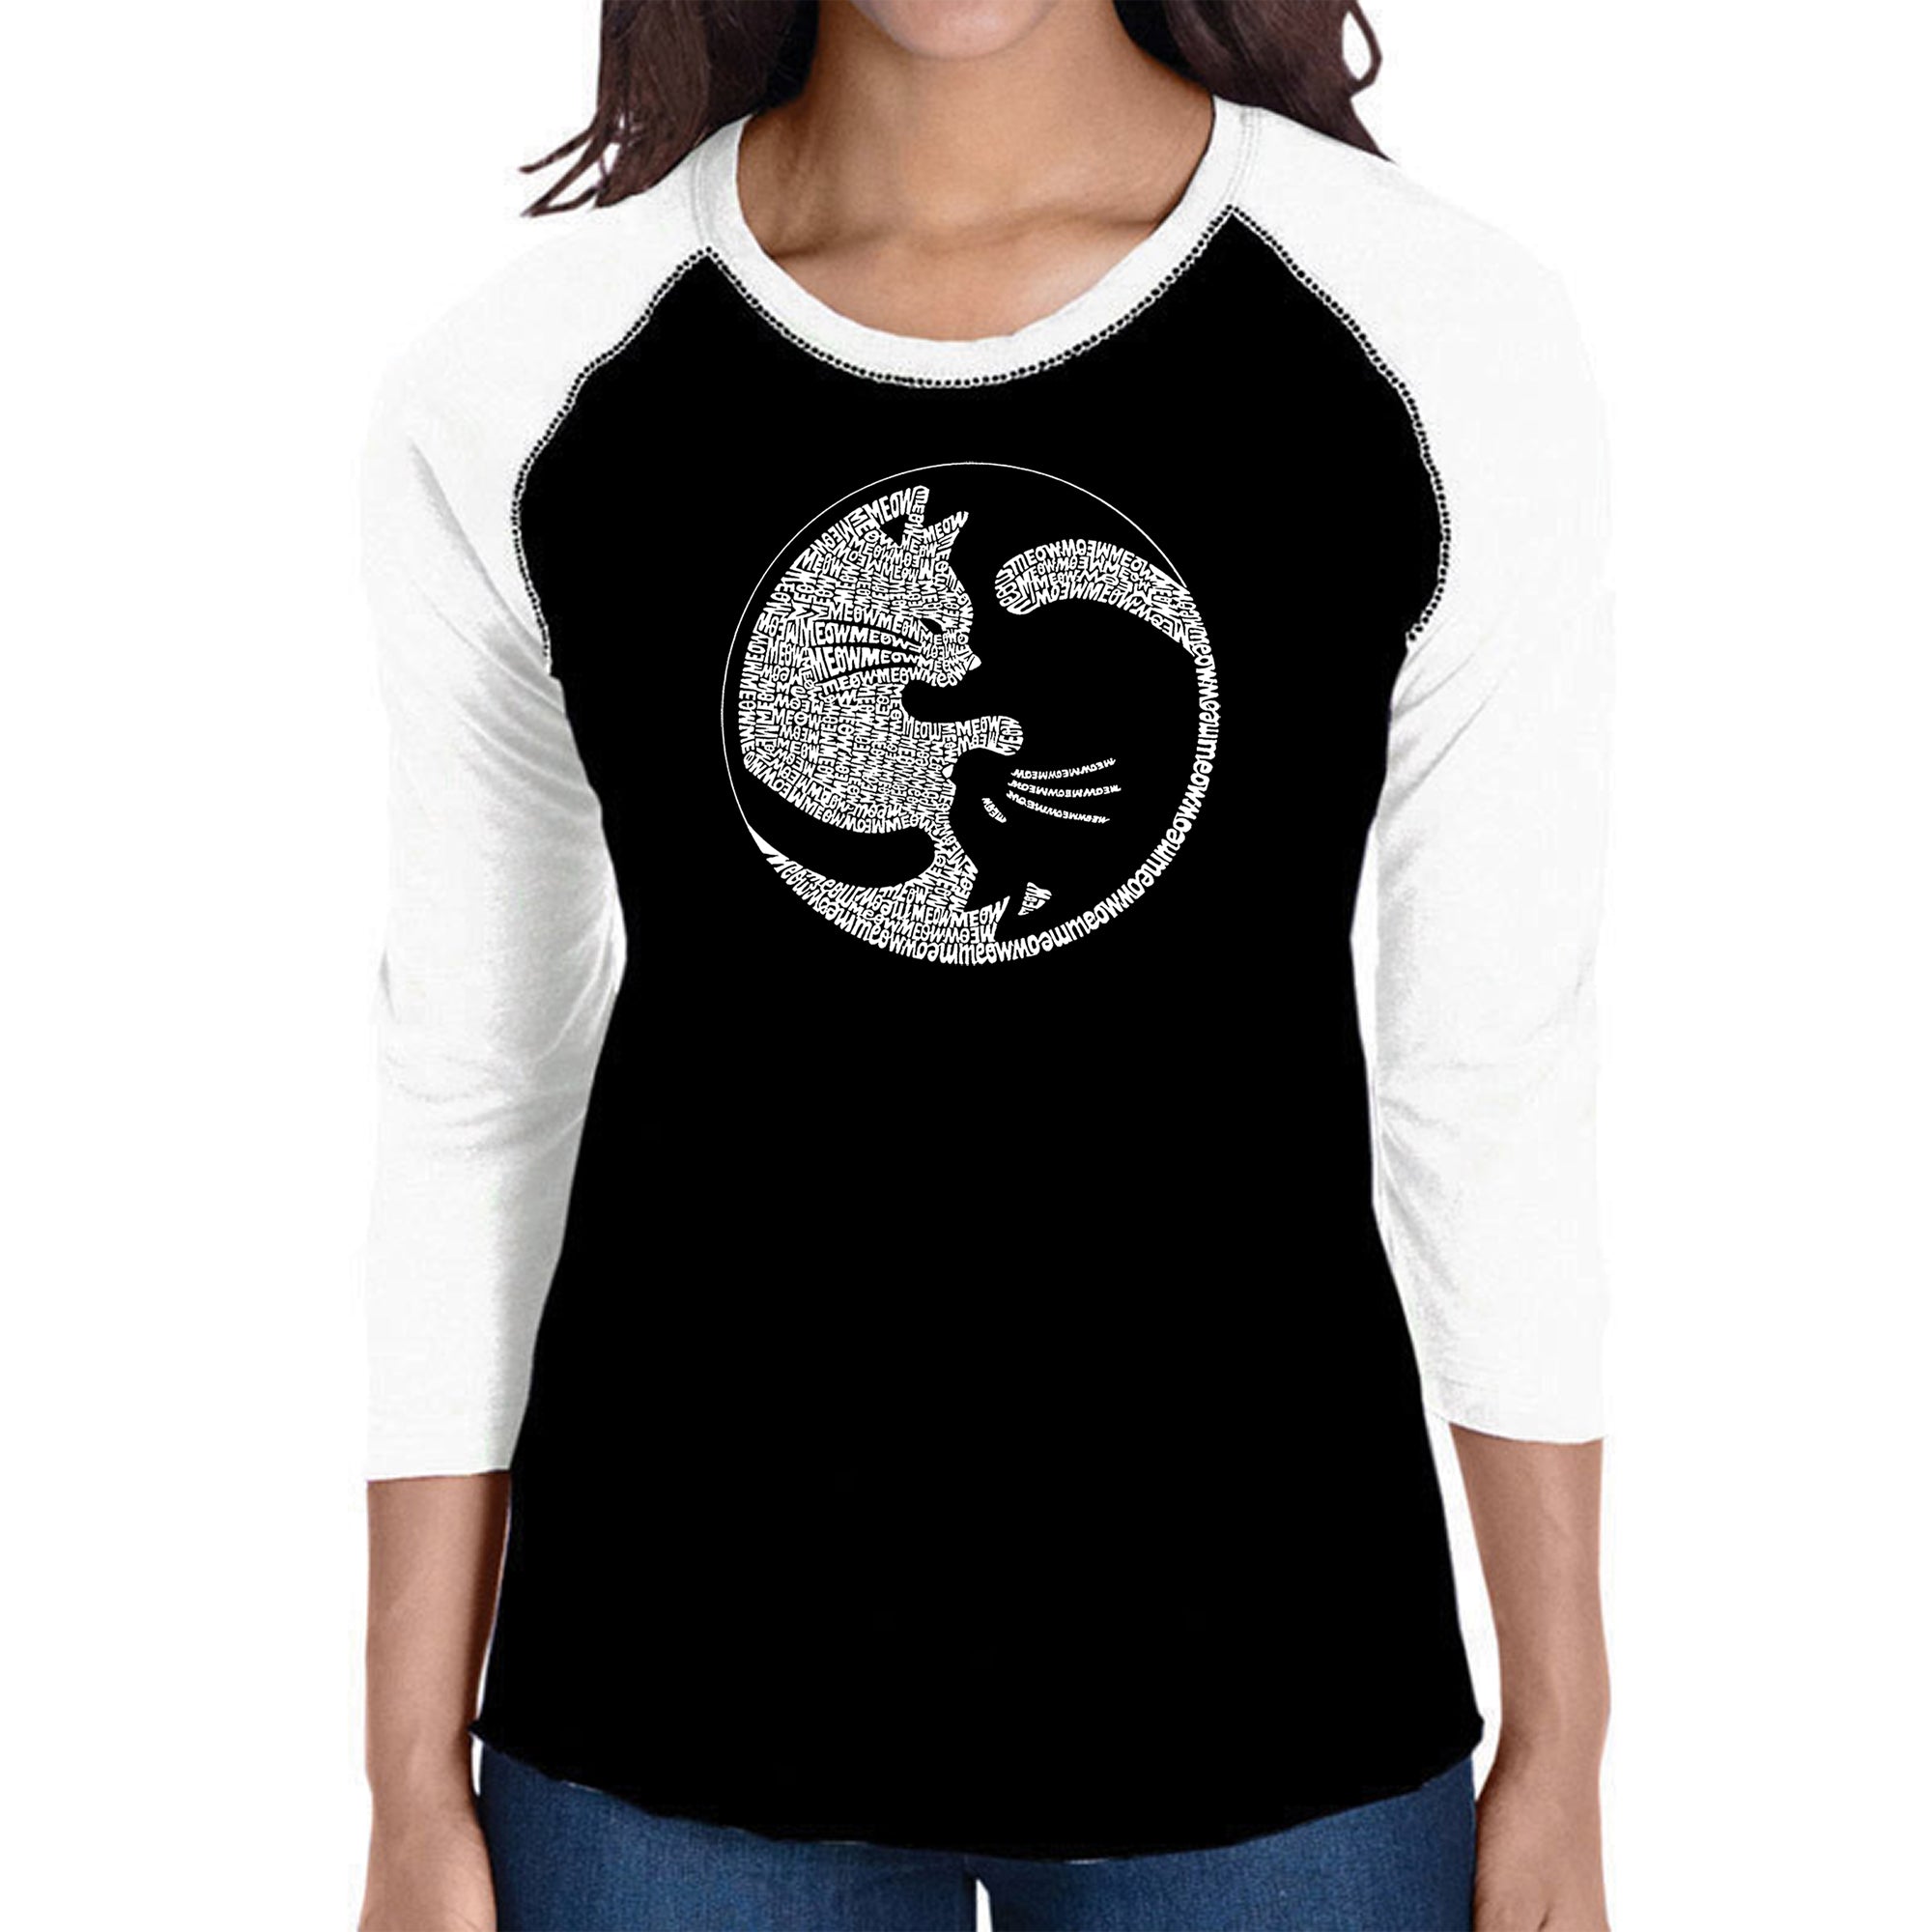 Yin Yang Cat - Women's Raglan Word Art T-Shirt - Black/White - Medium